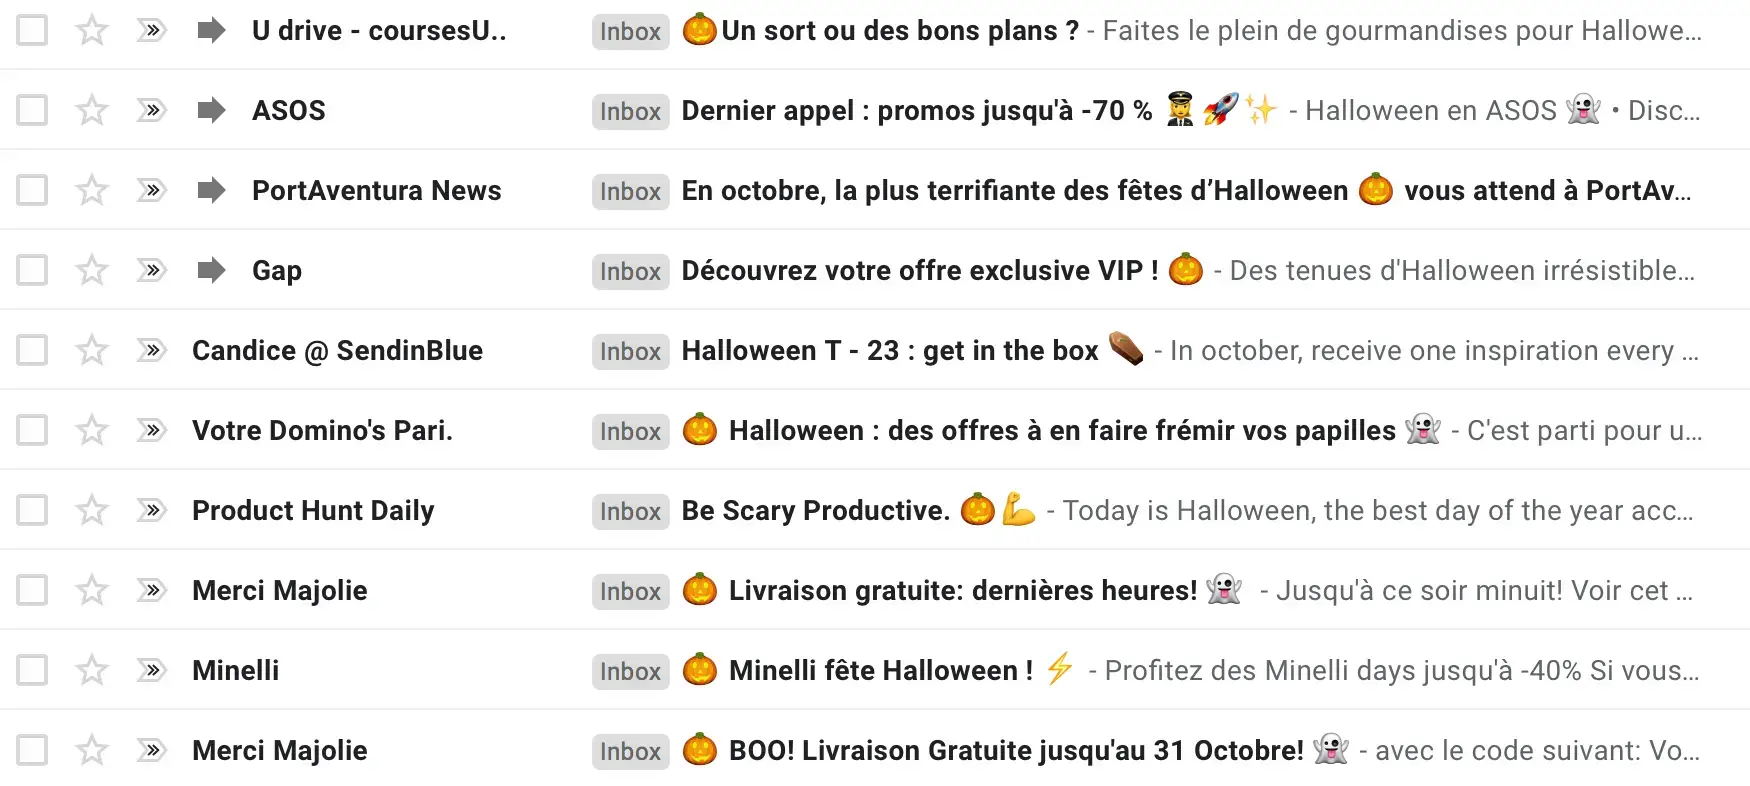 Blogduwebdesign newsletter halloween guide pratique objets email